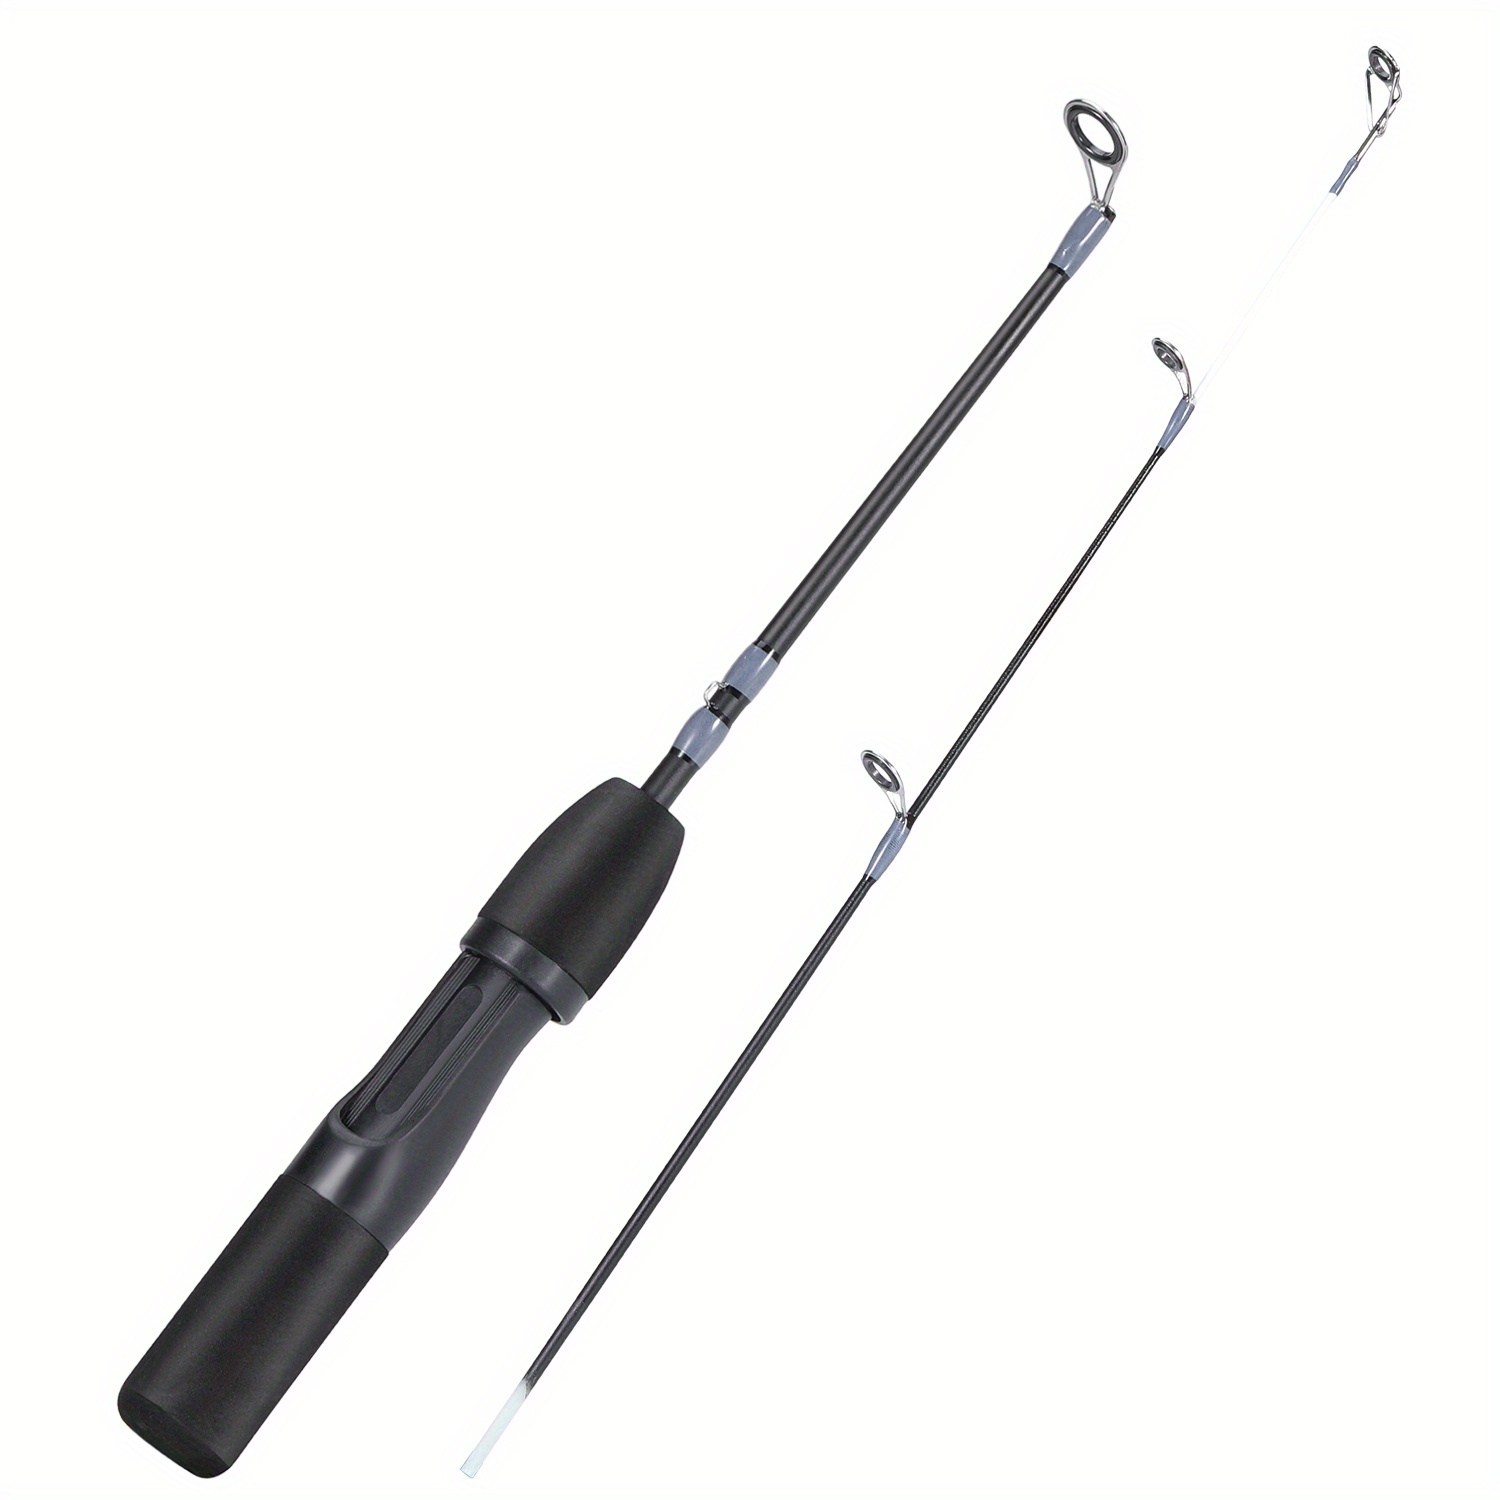 Sougayilang 2 Sections Ice Fishing Rod, Black Power Fishing Pole